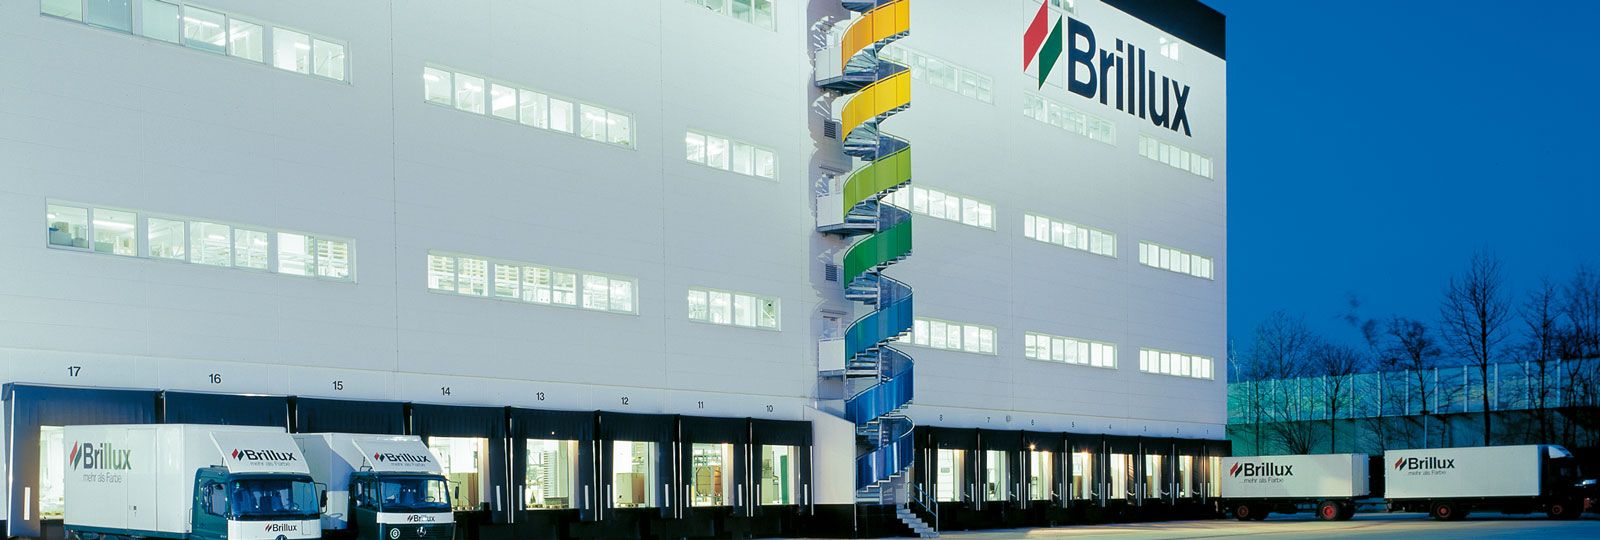 Brillux GmbH & Co. KG in Münster